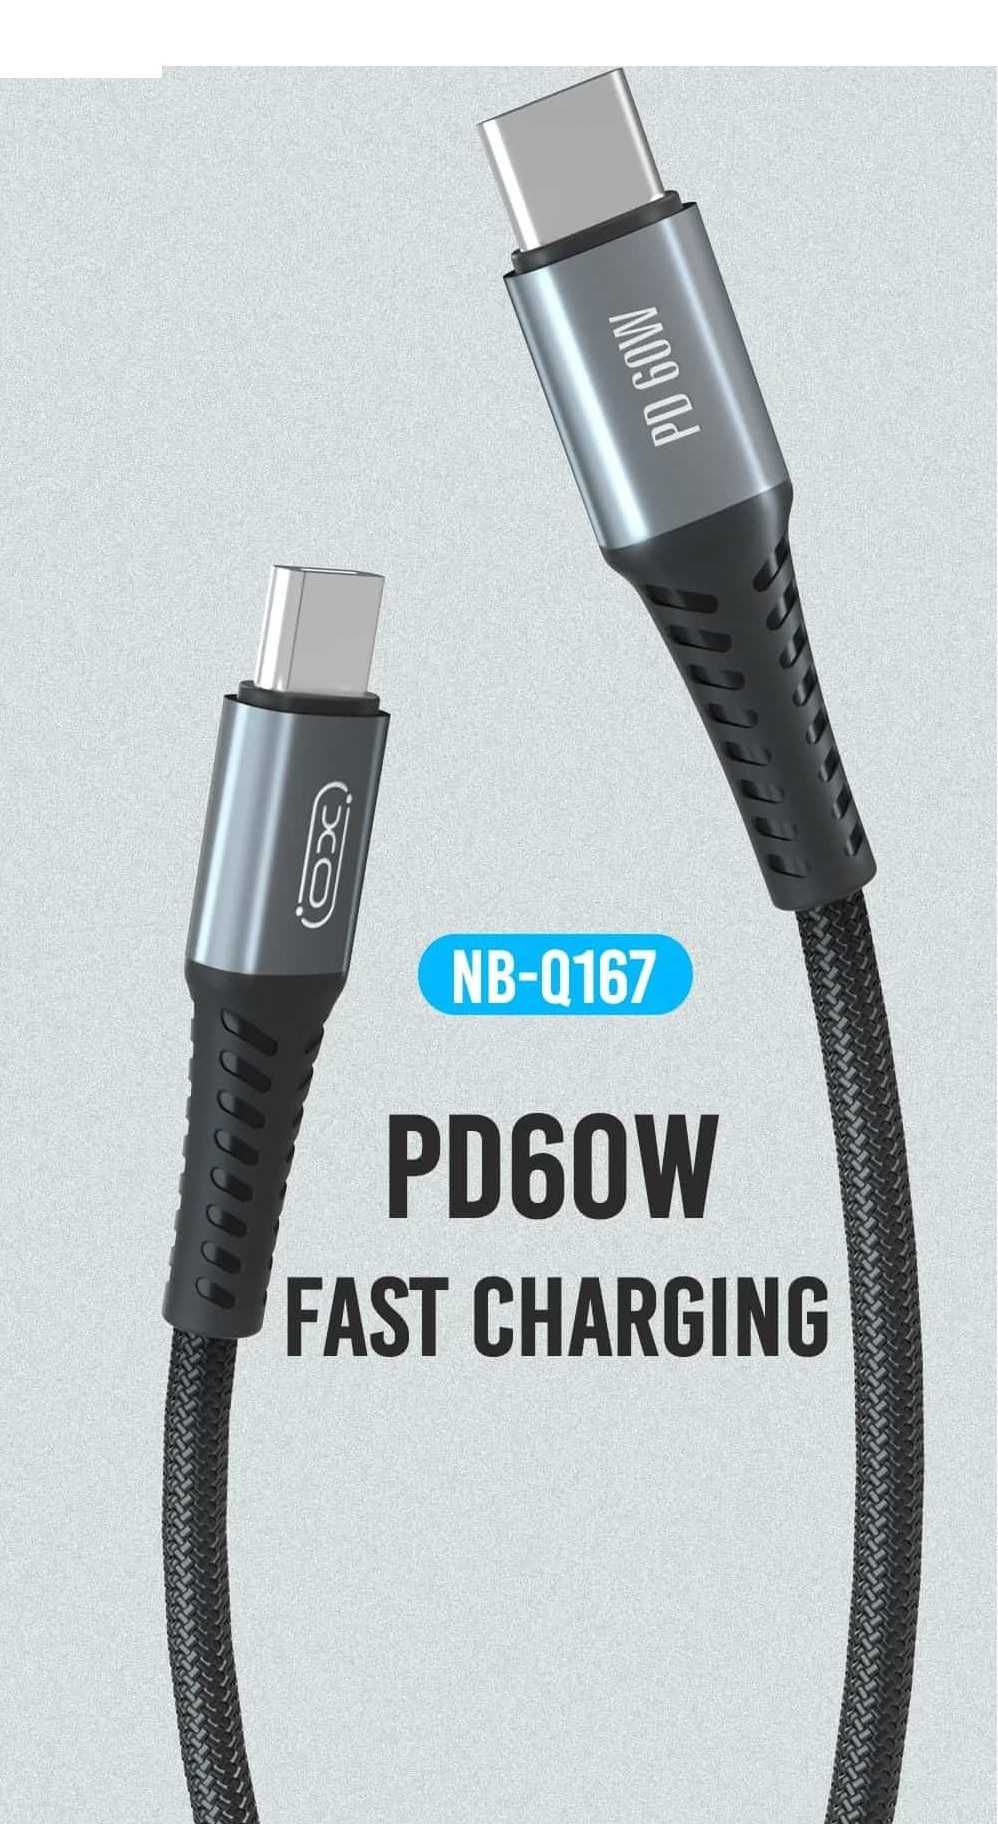 Cabluri premium Lightning USB-C MicroUsb iPhone Samsung Huawei Oppo